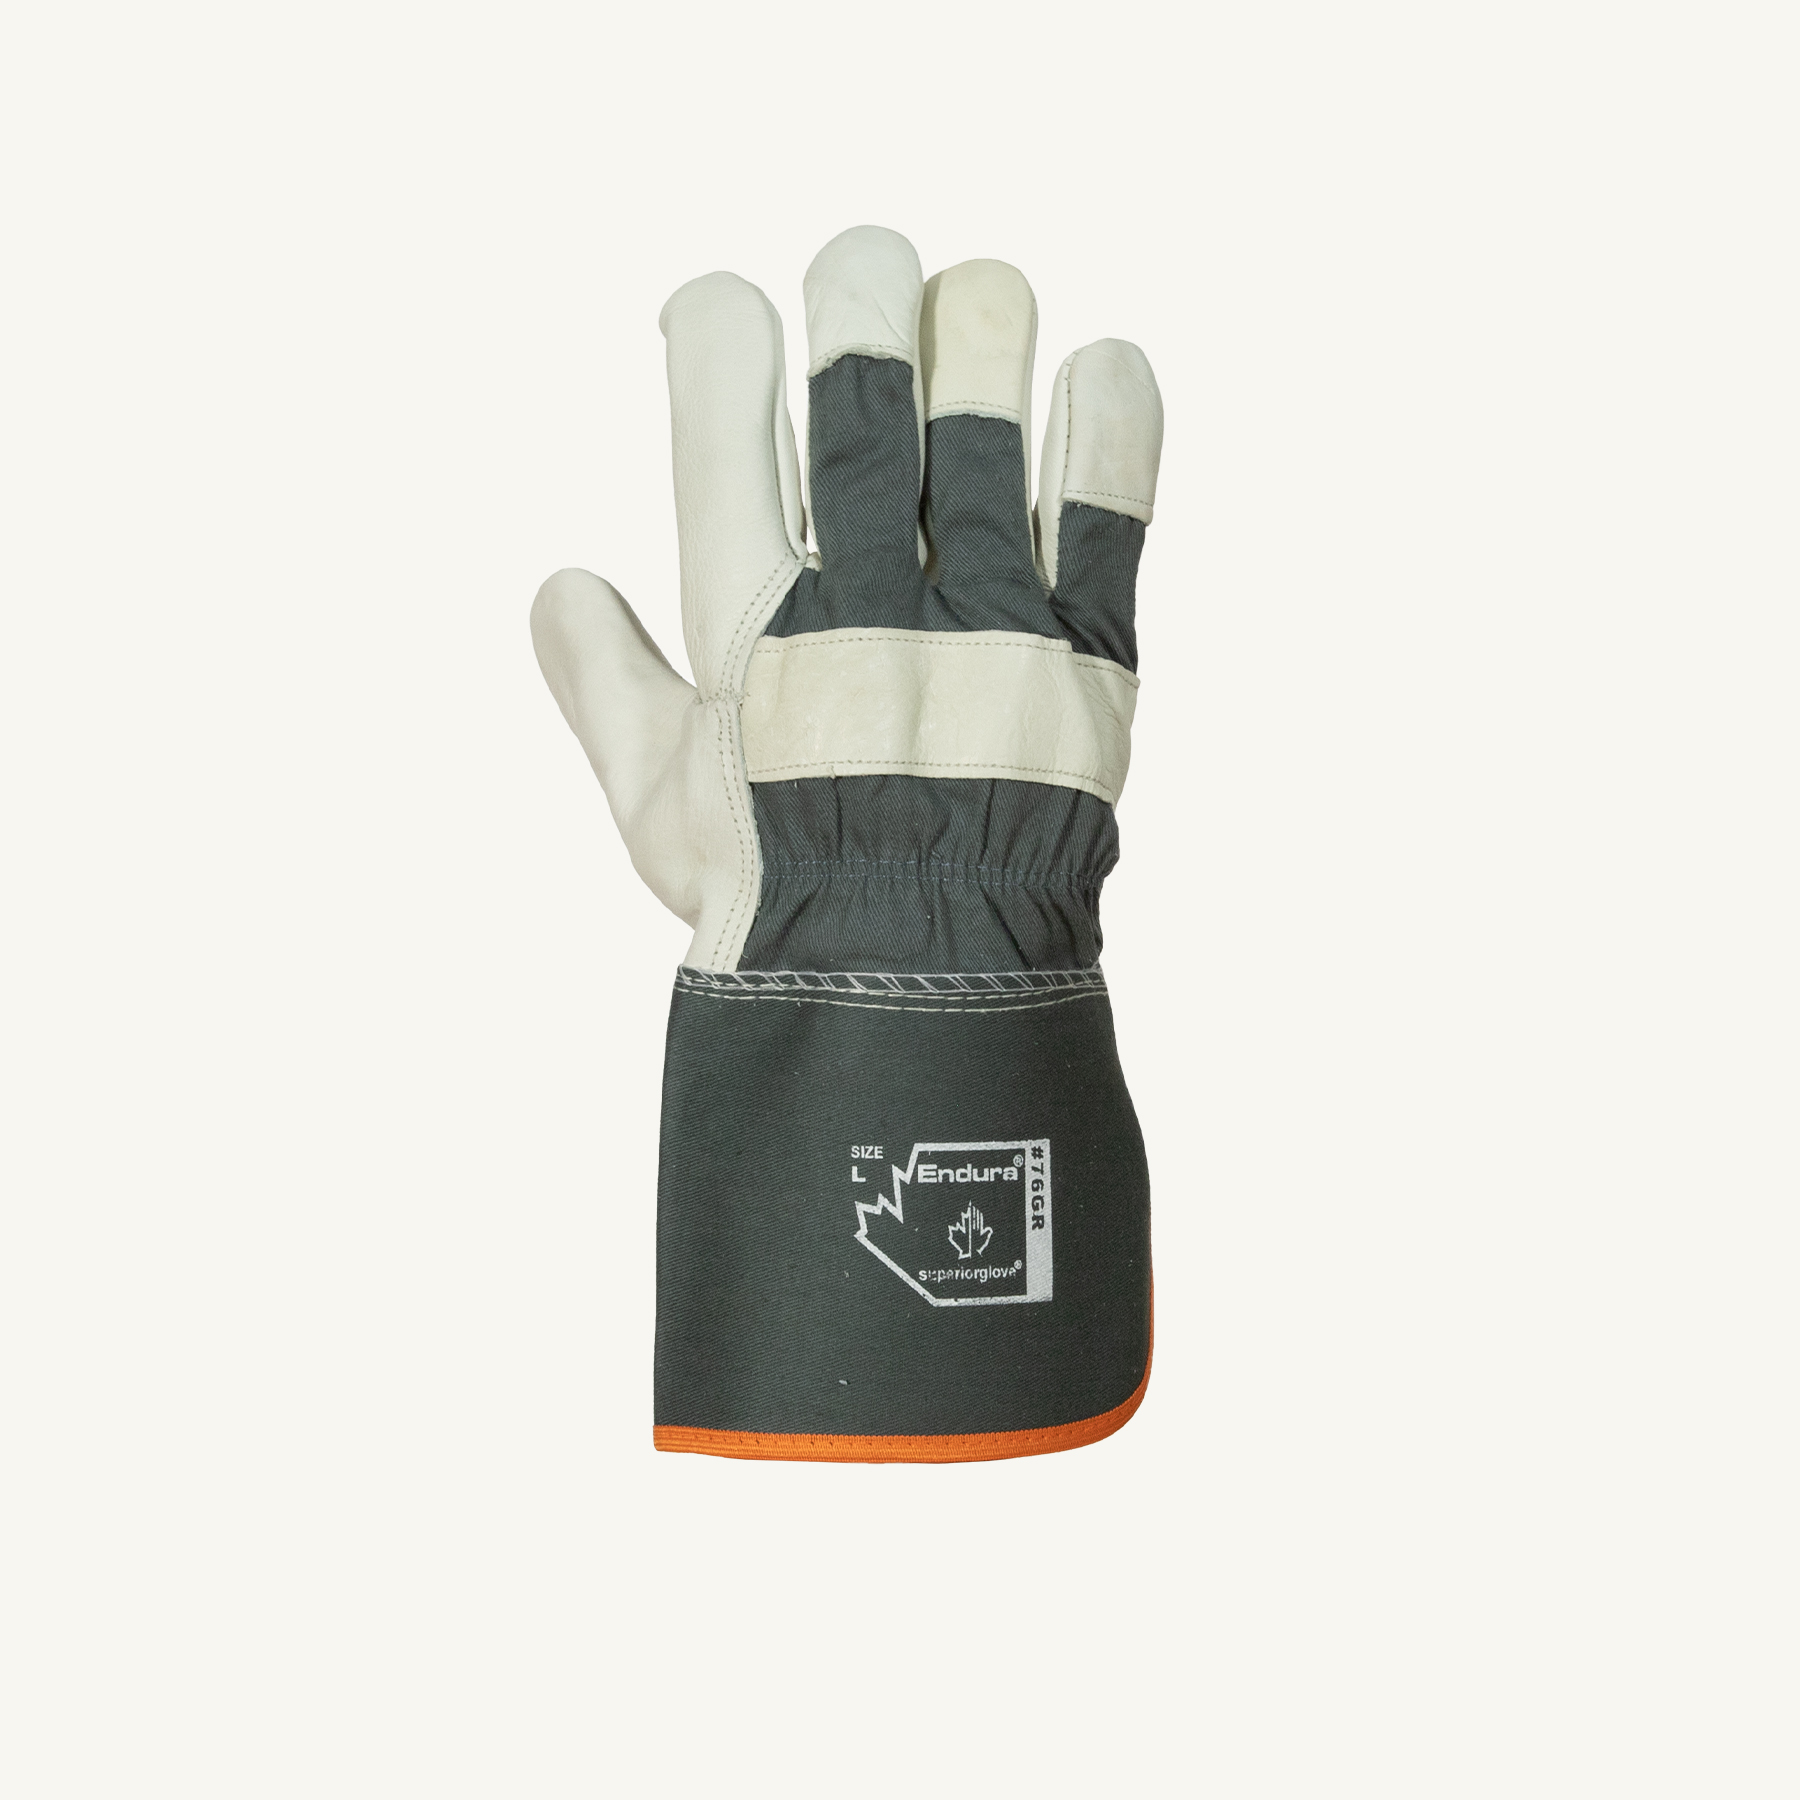 Superior Glove® Endura® Cowgrain Leather Fitters Work Gloves w/ Rubberized Cuff #76GR